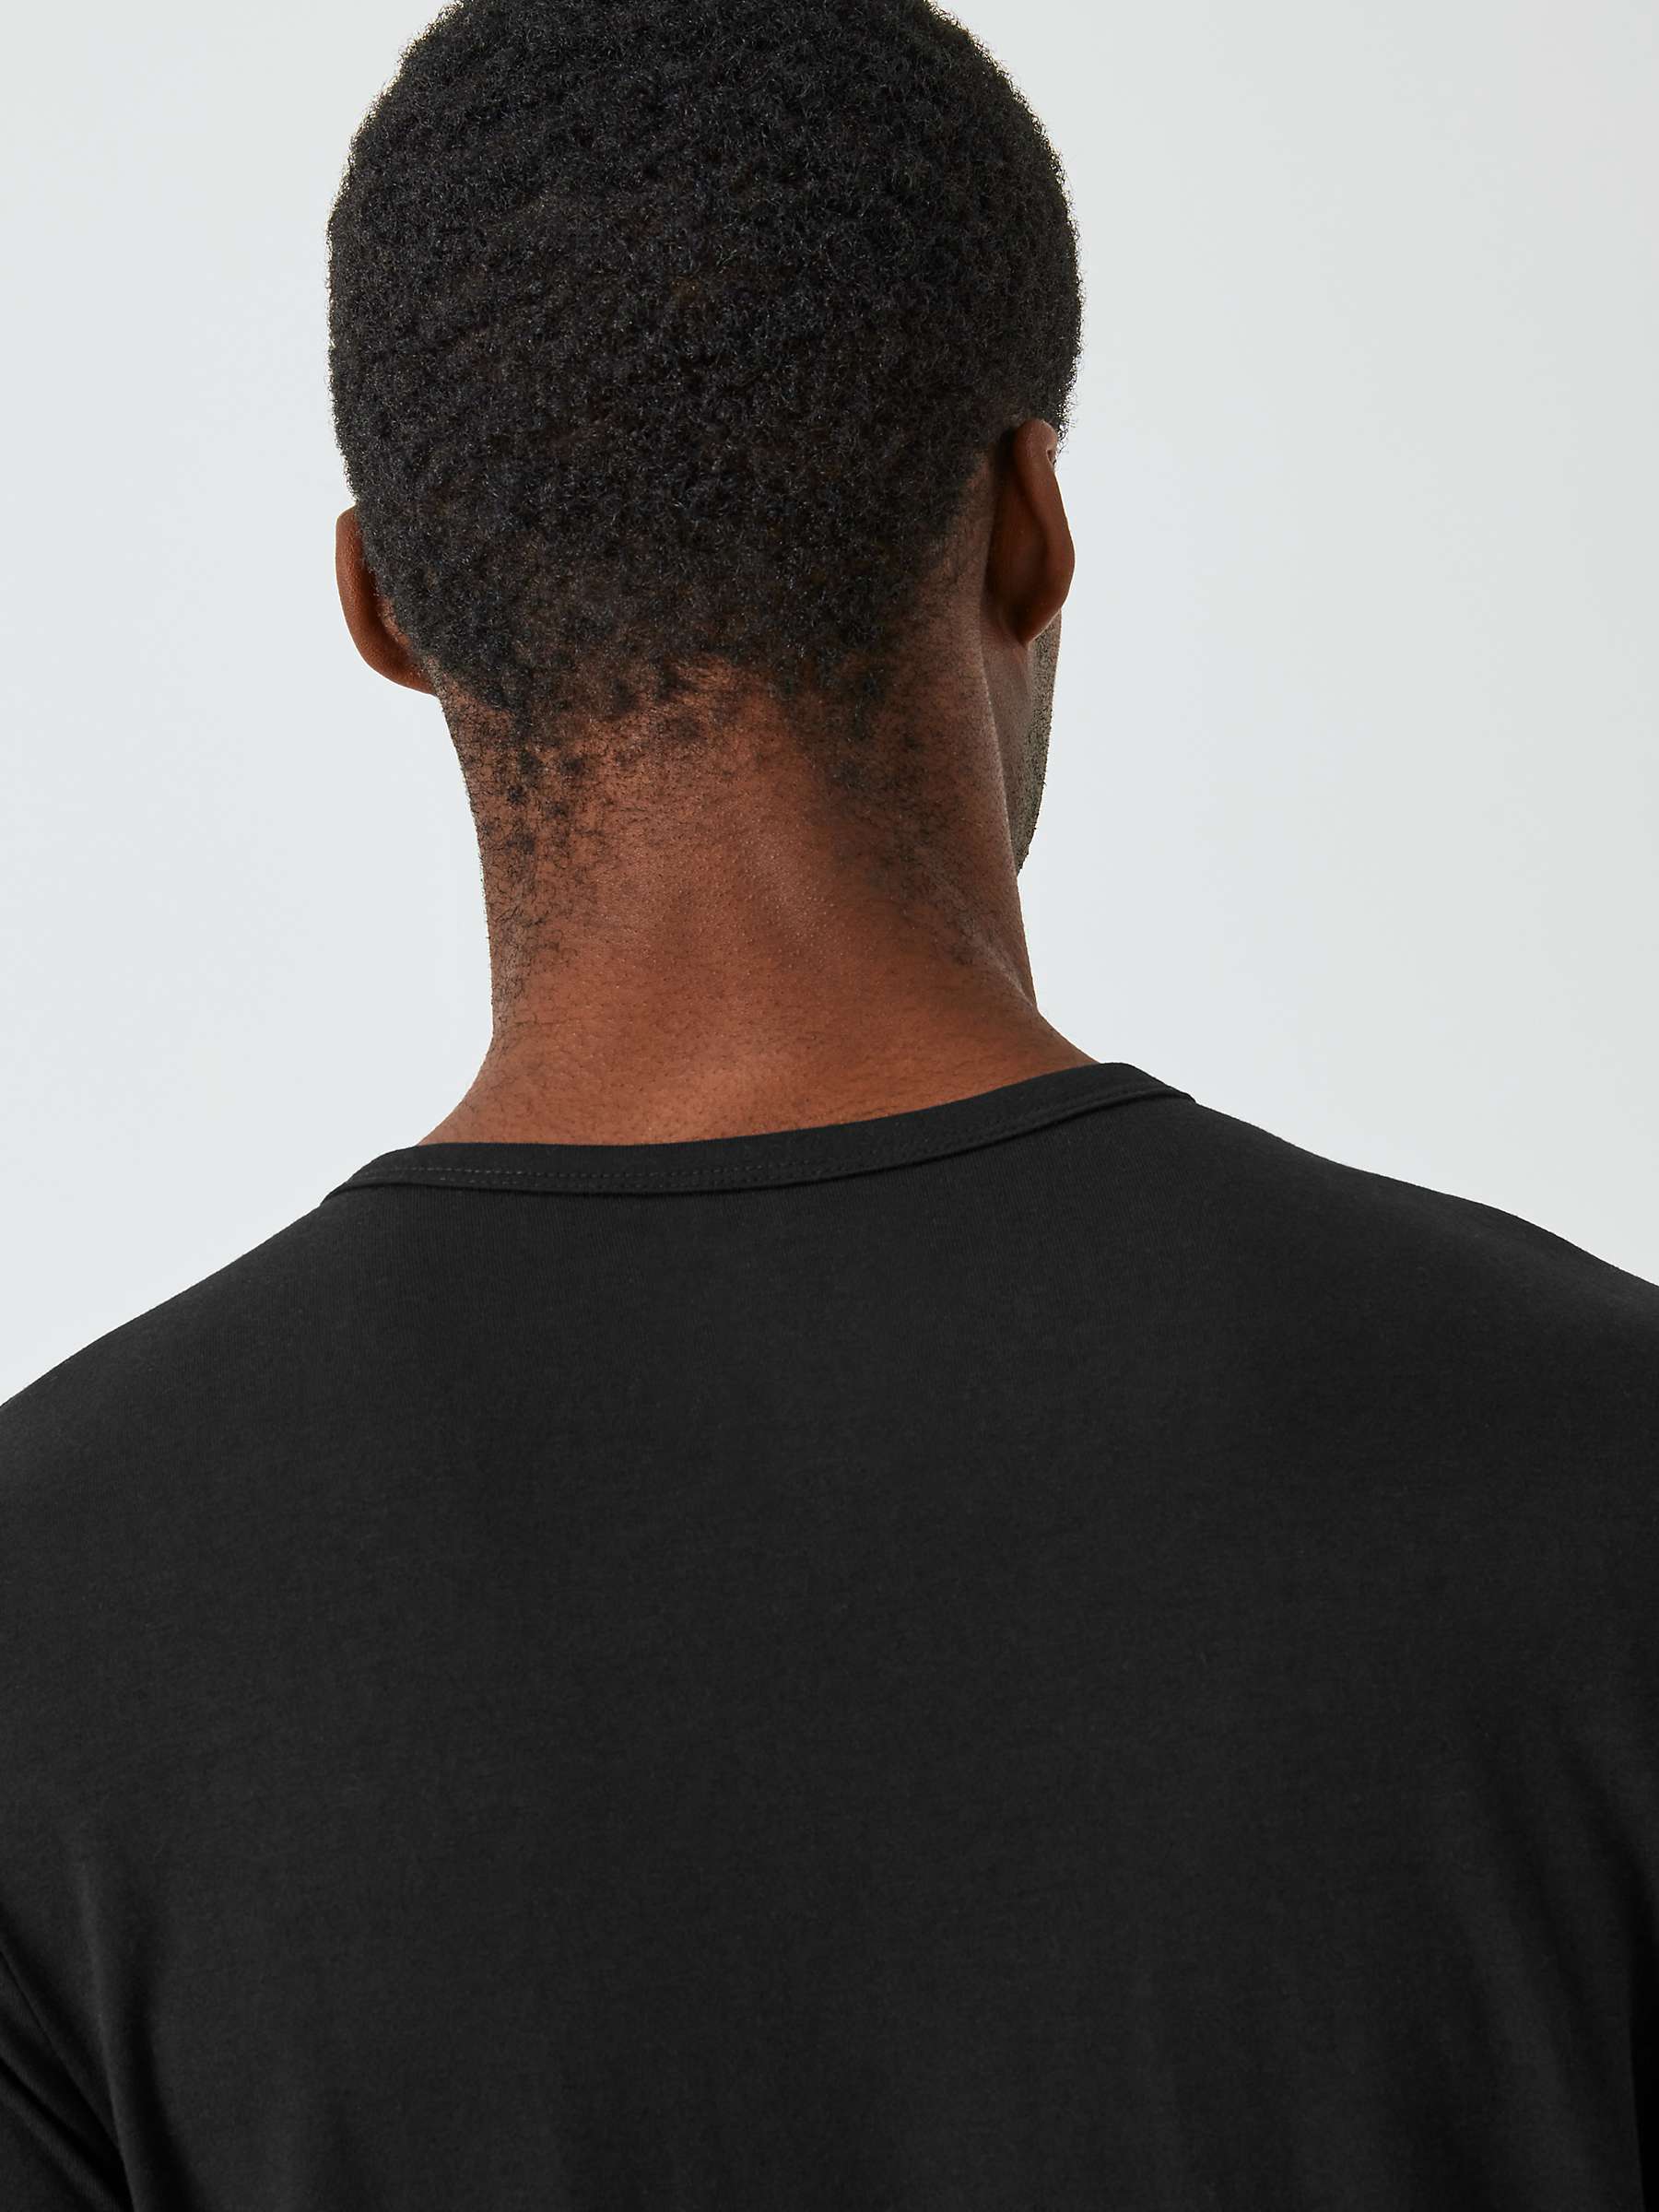 Buy John Lewis Short Sleeve Thermal T-Shirt, Pack of 2, Black Online at johnlewis.com